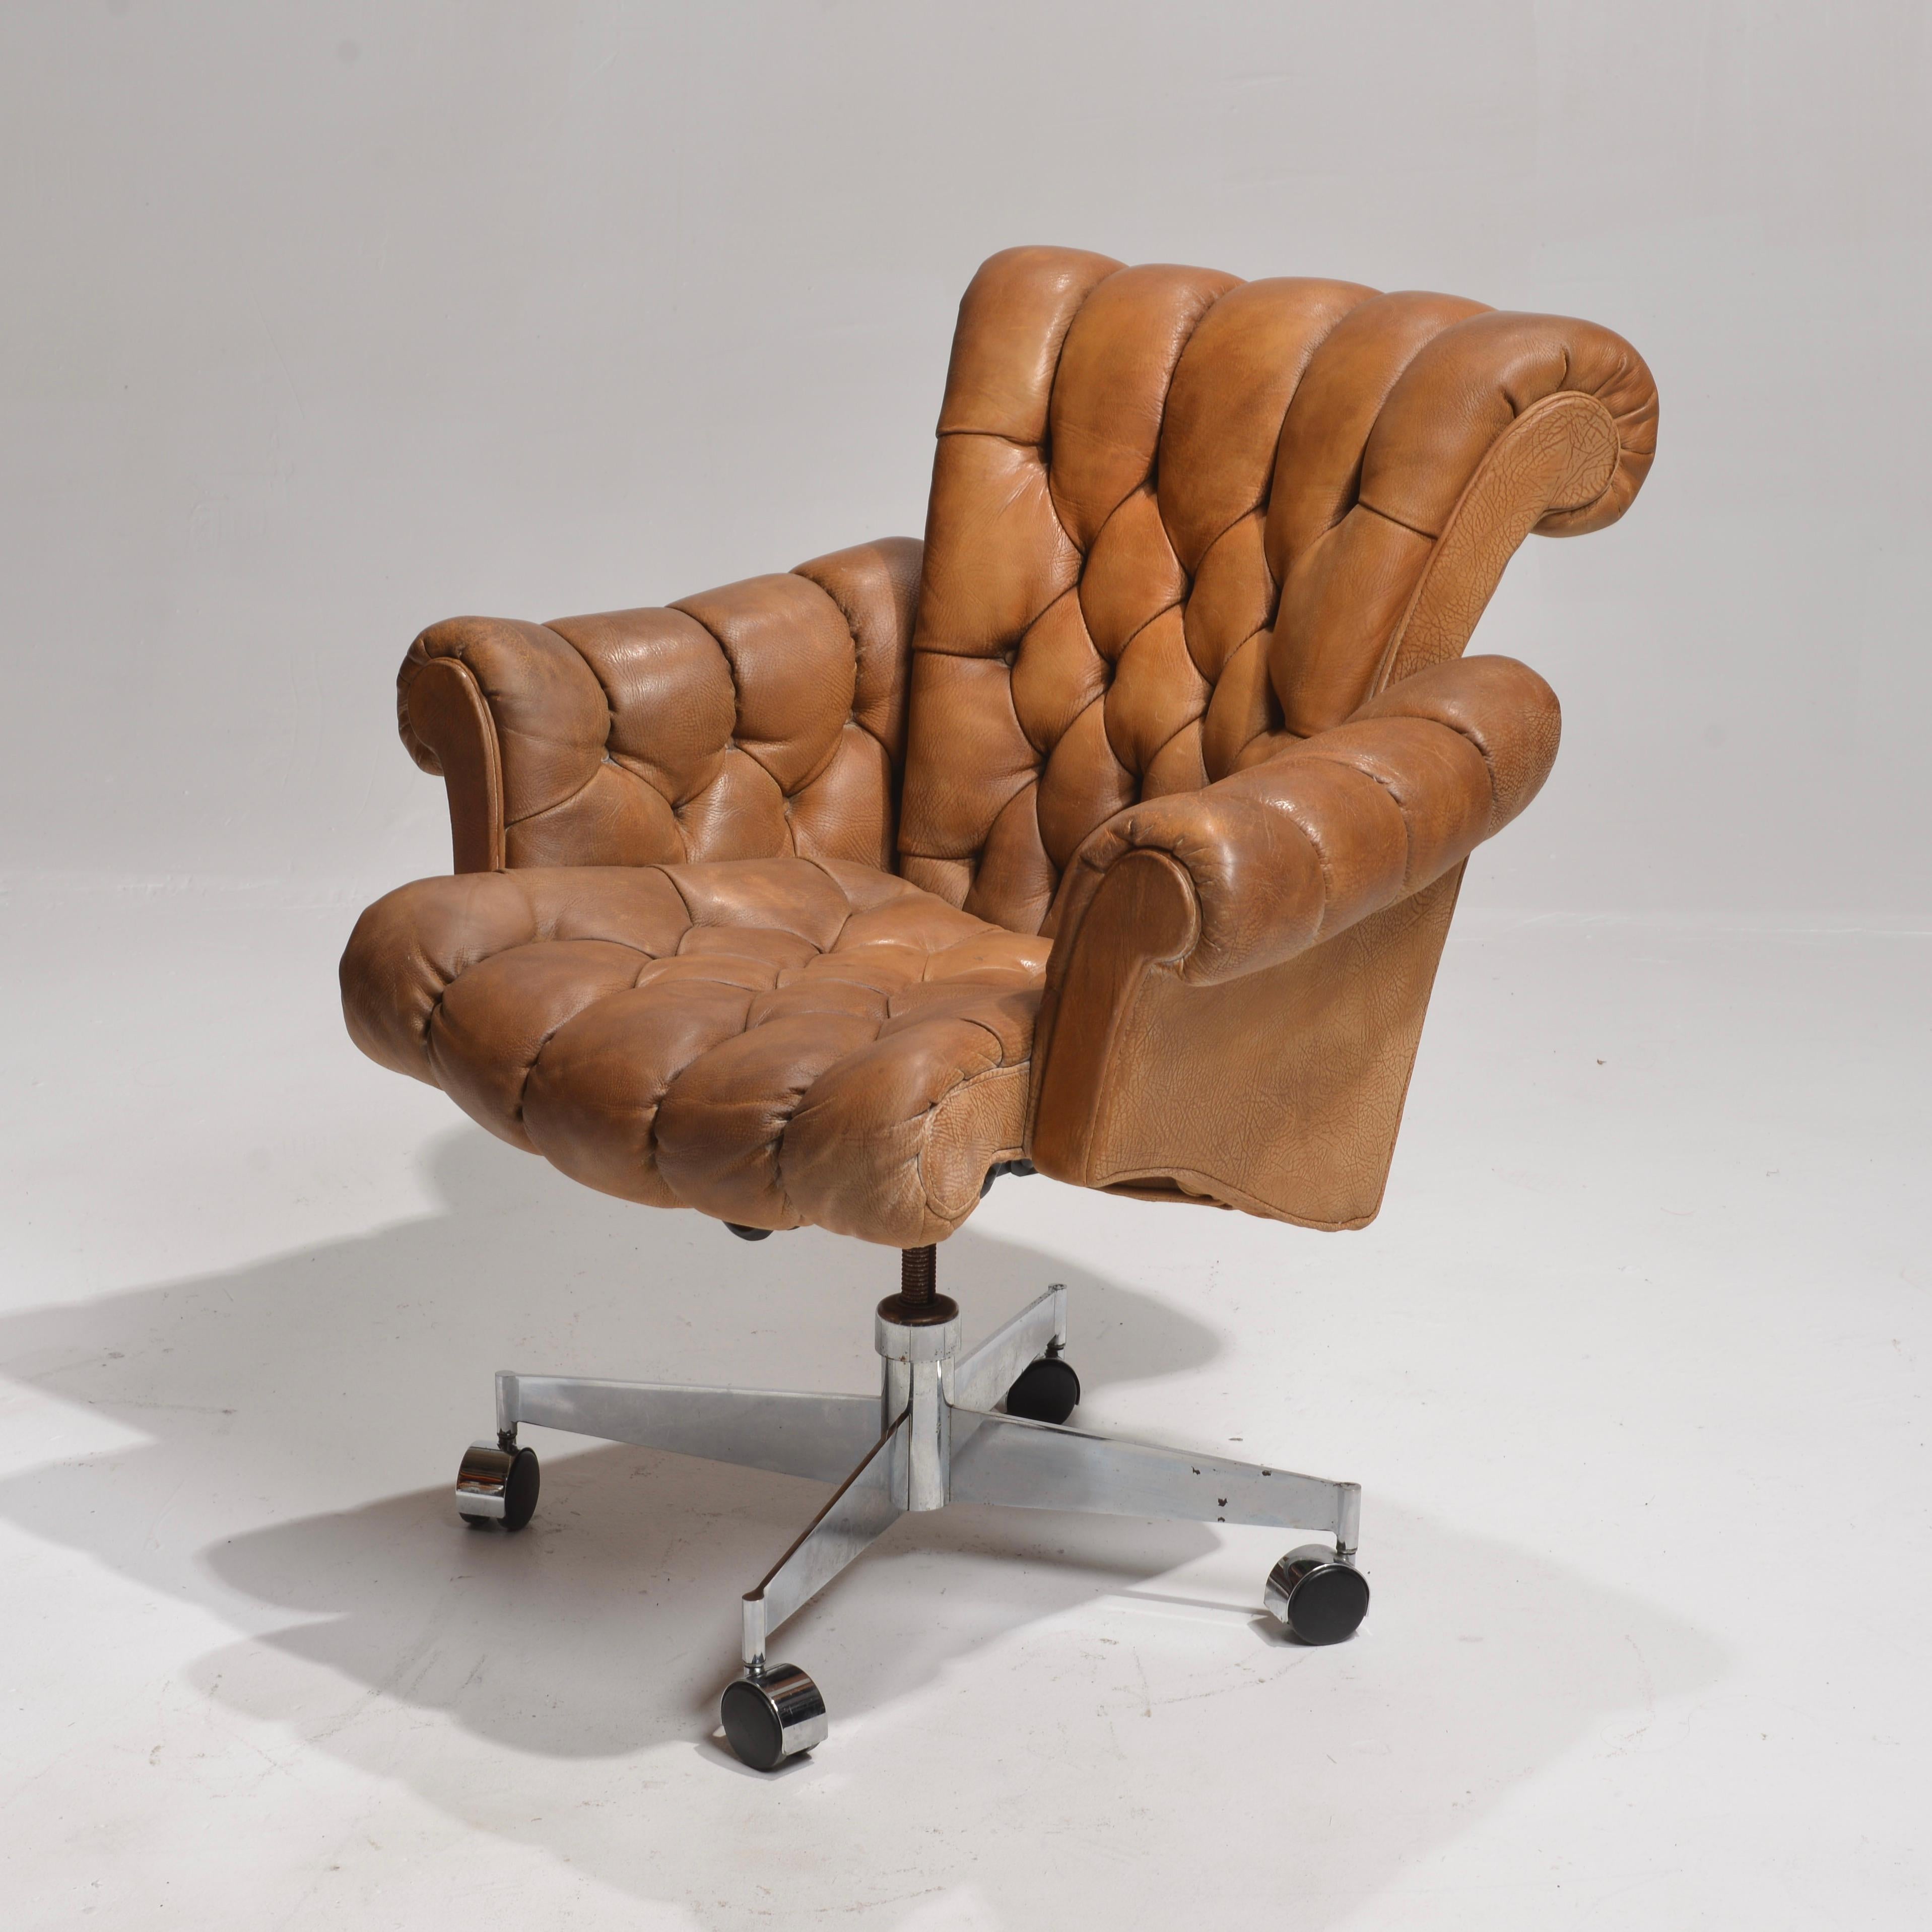 Steel Rare Desk Chair by Edward Wormley